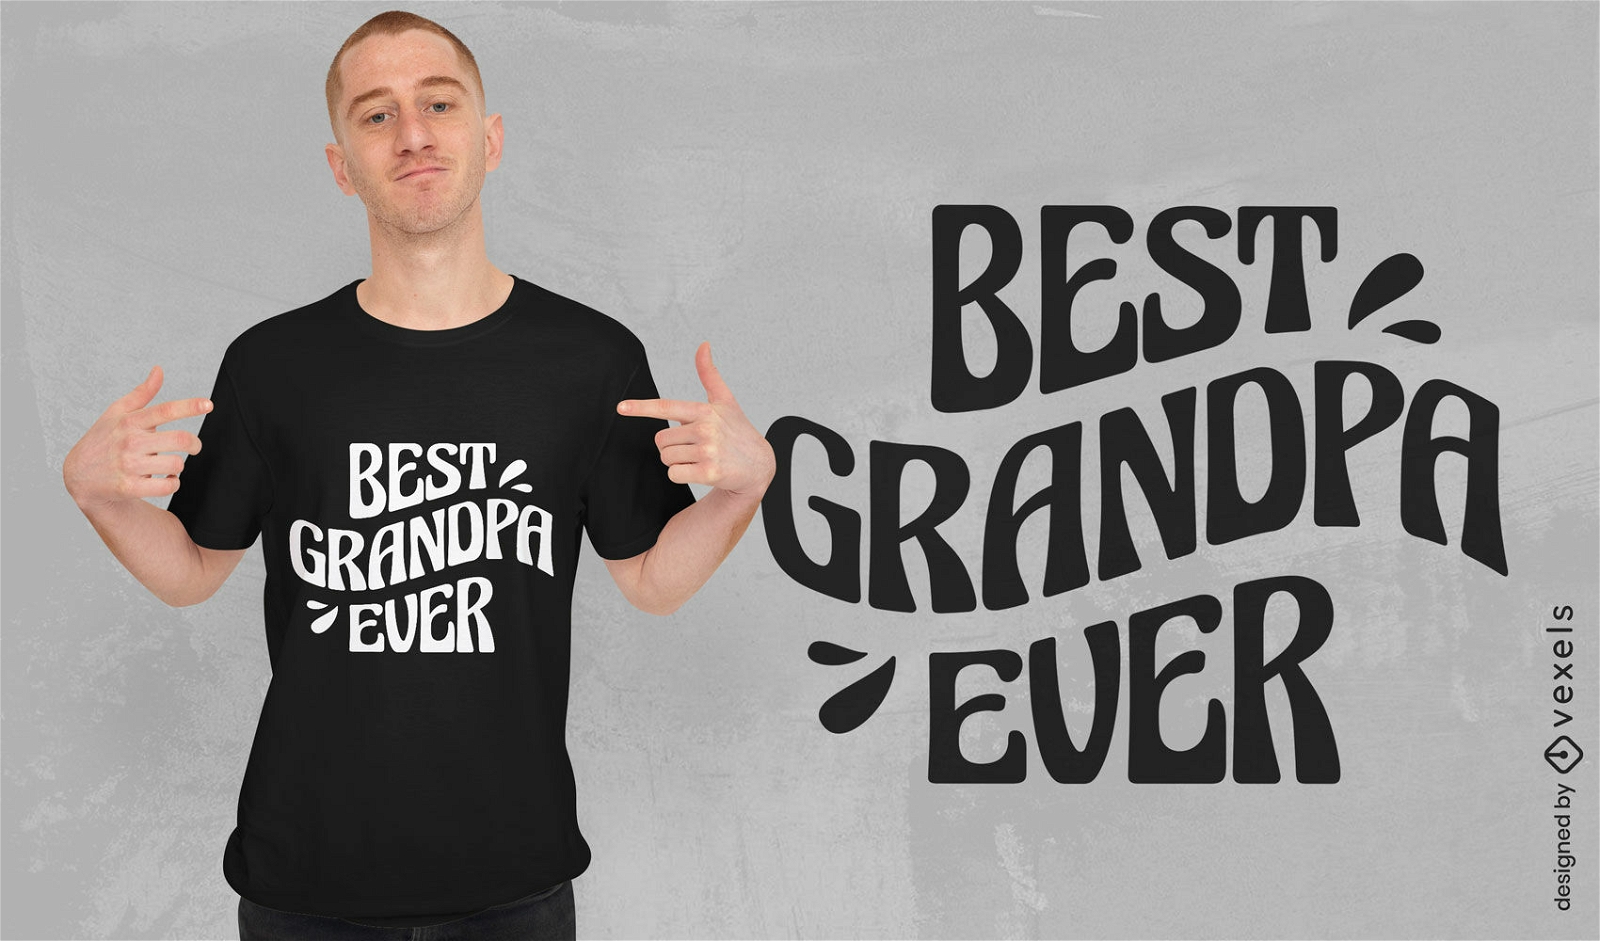 Best grandpa ever quote t-shirt design